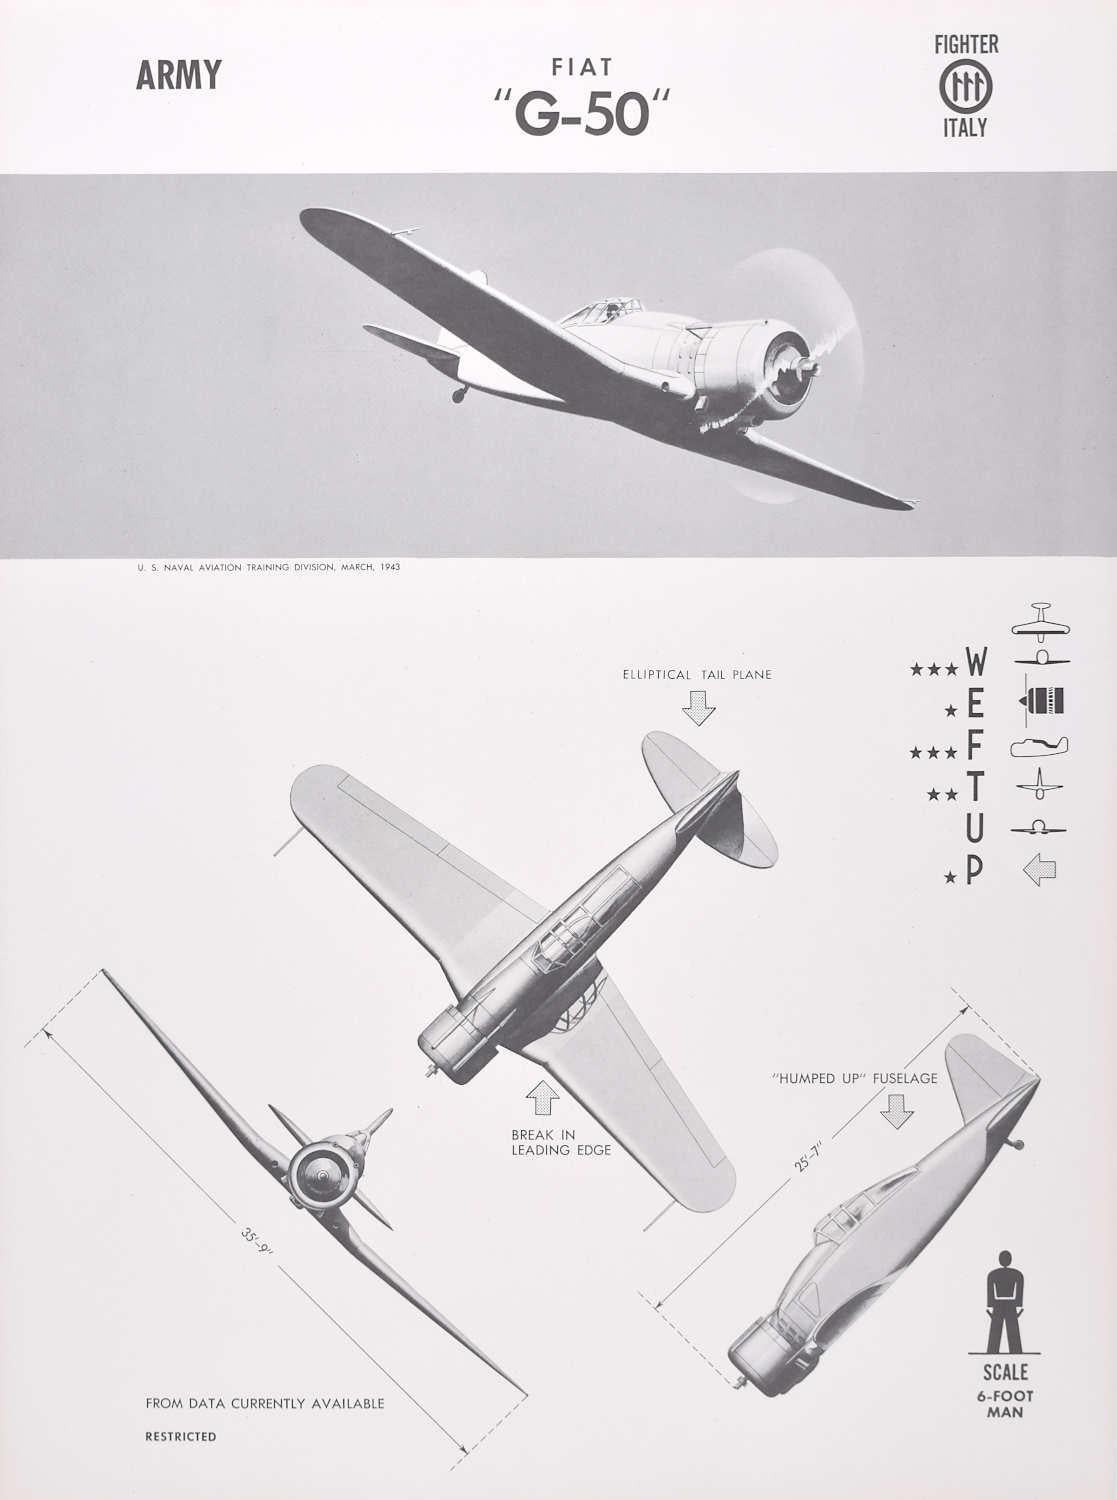 1943 Fiat "G-50" Italian fighter plane identification poster WW2 - Print by Unknown